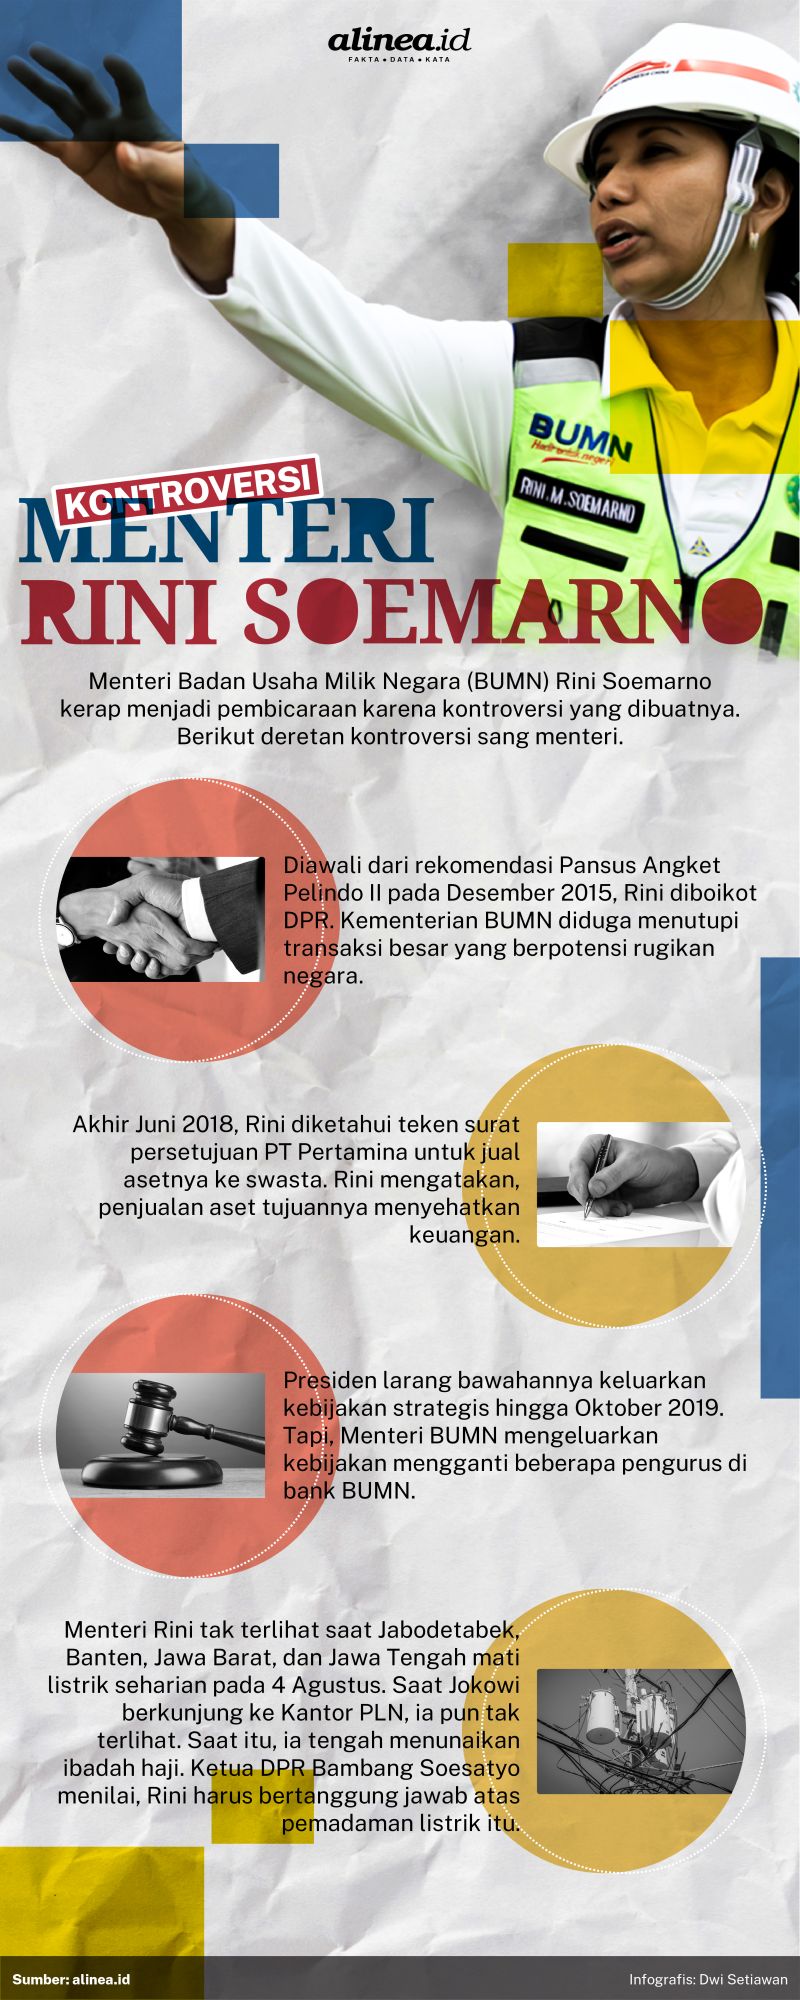 Rini Soemarno dinilai kontroversial dengan langkah dan keputusannya. Alinea.id/Dwi Setiawan..